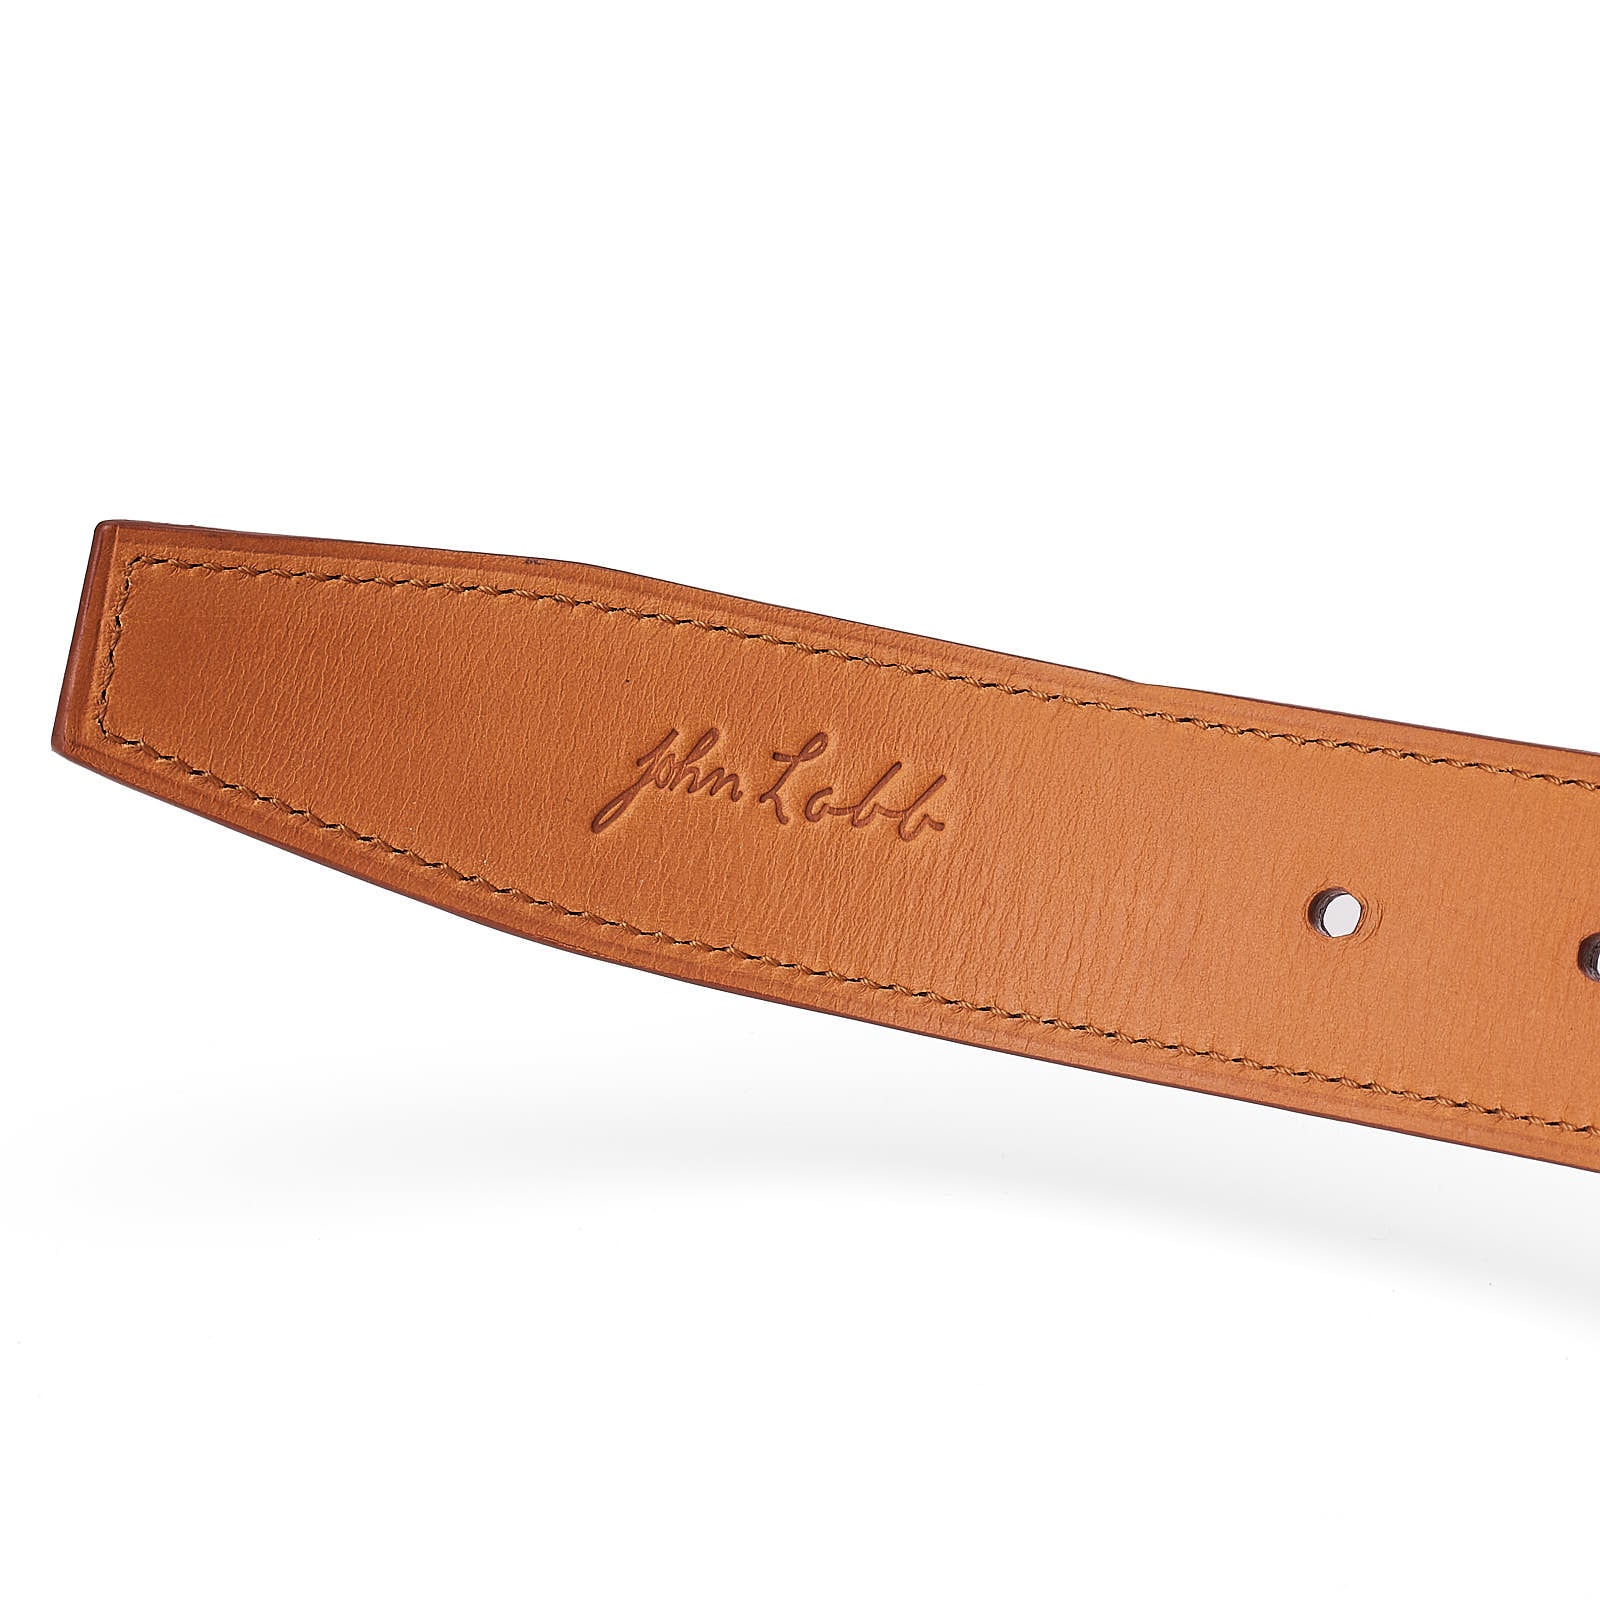 JOHN LOBB Paris Bespoke Handmade Cognac Calfskin Leather Belt 85cm 34"